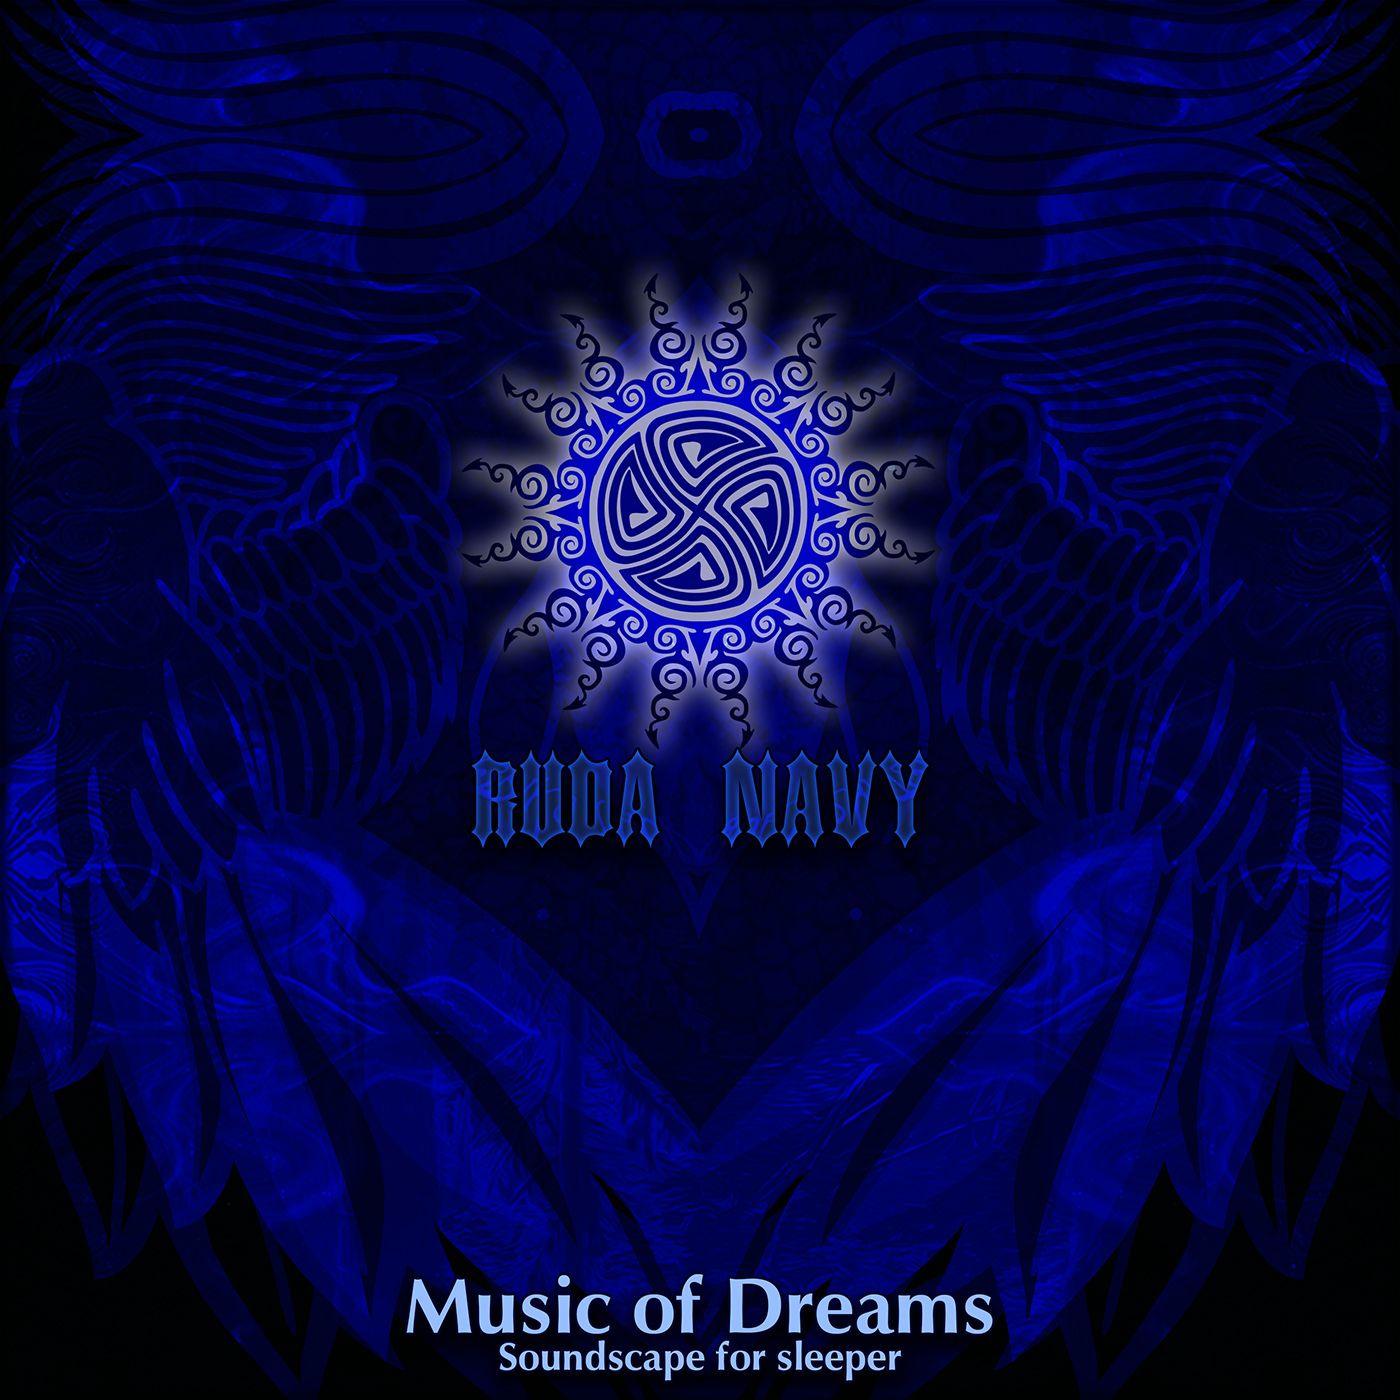 Music of Dreams, by RudaNavy